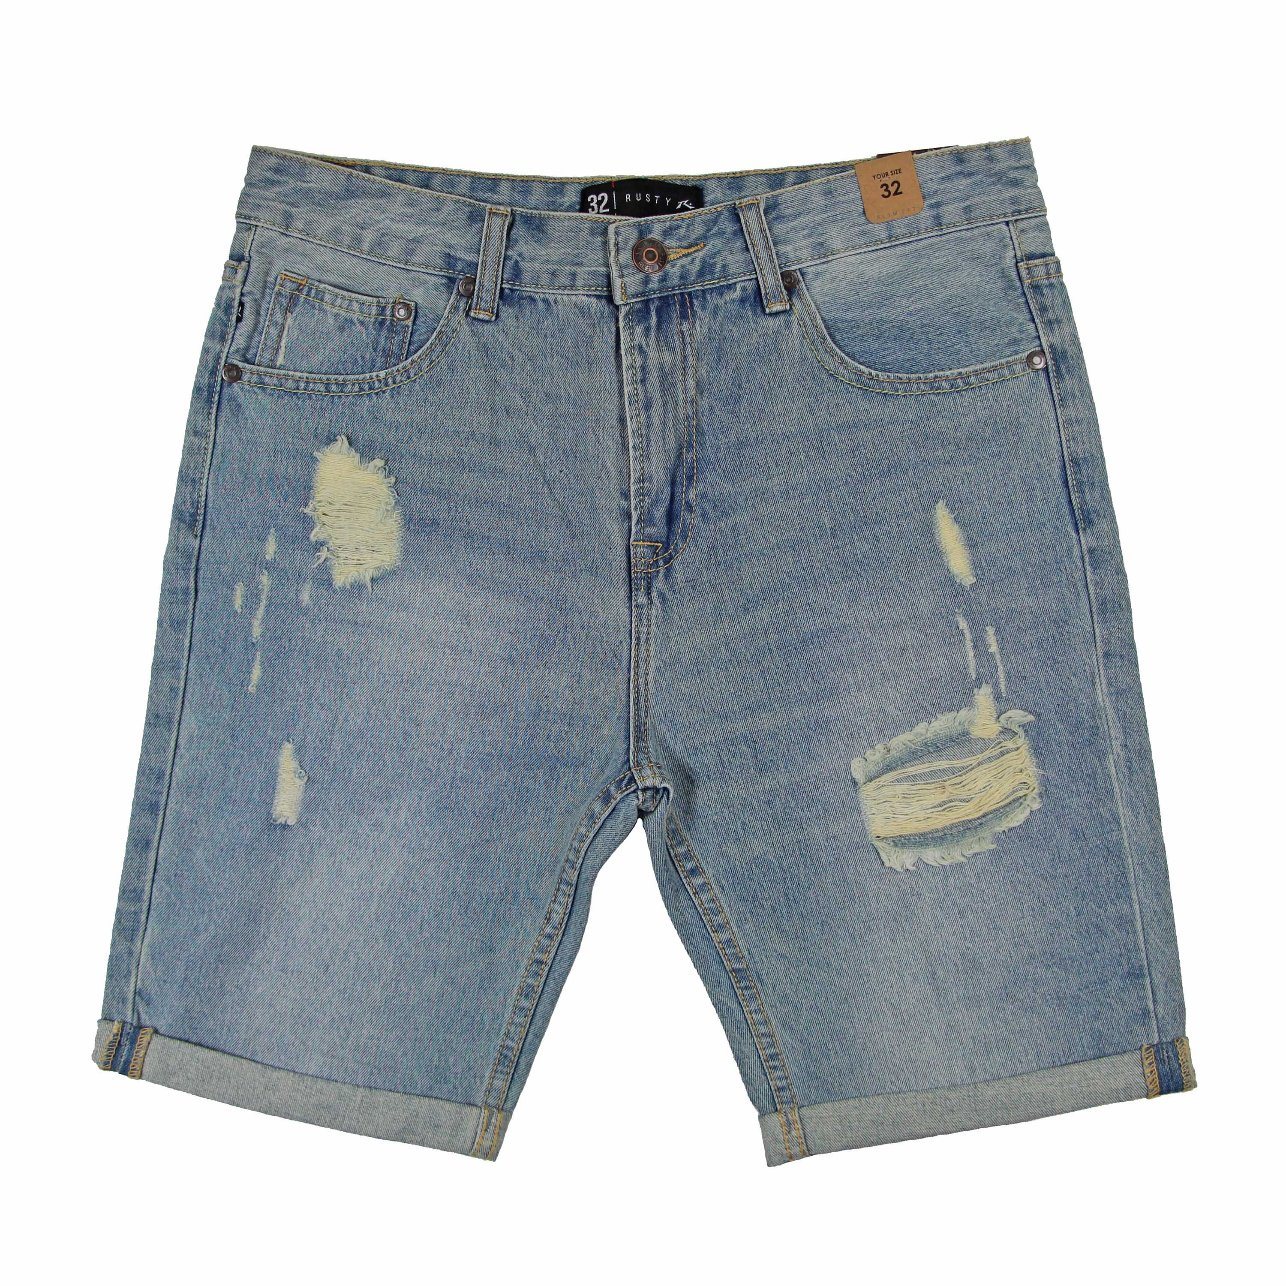 Men's Fashion & Nice Washing Wholesale Short Jeans (MY-029)